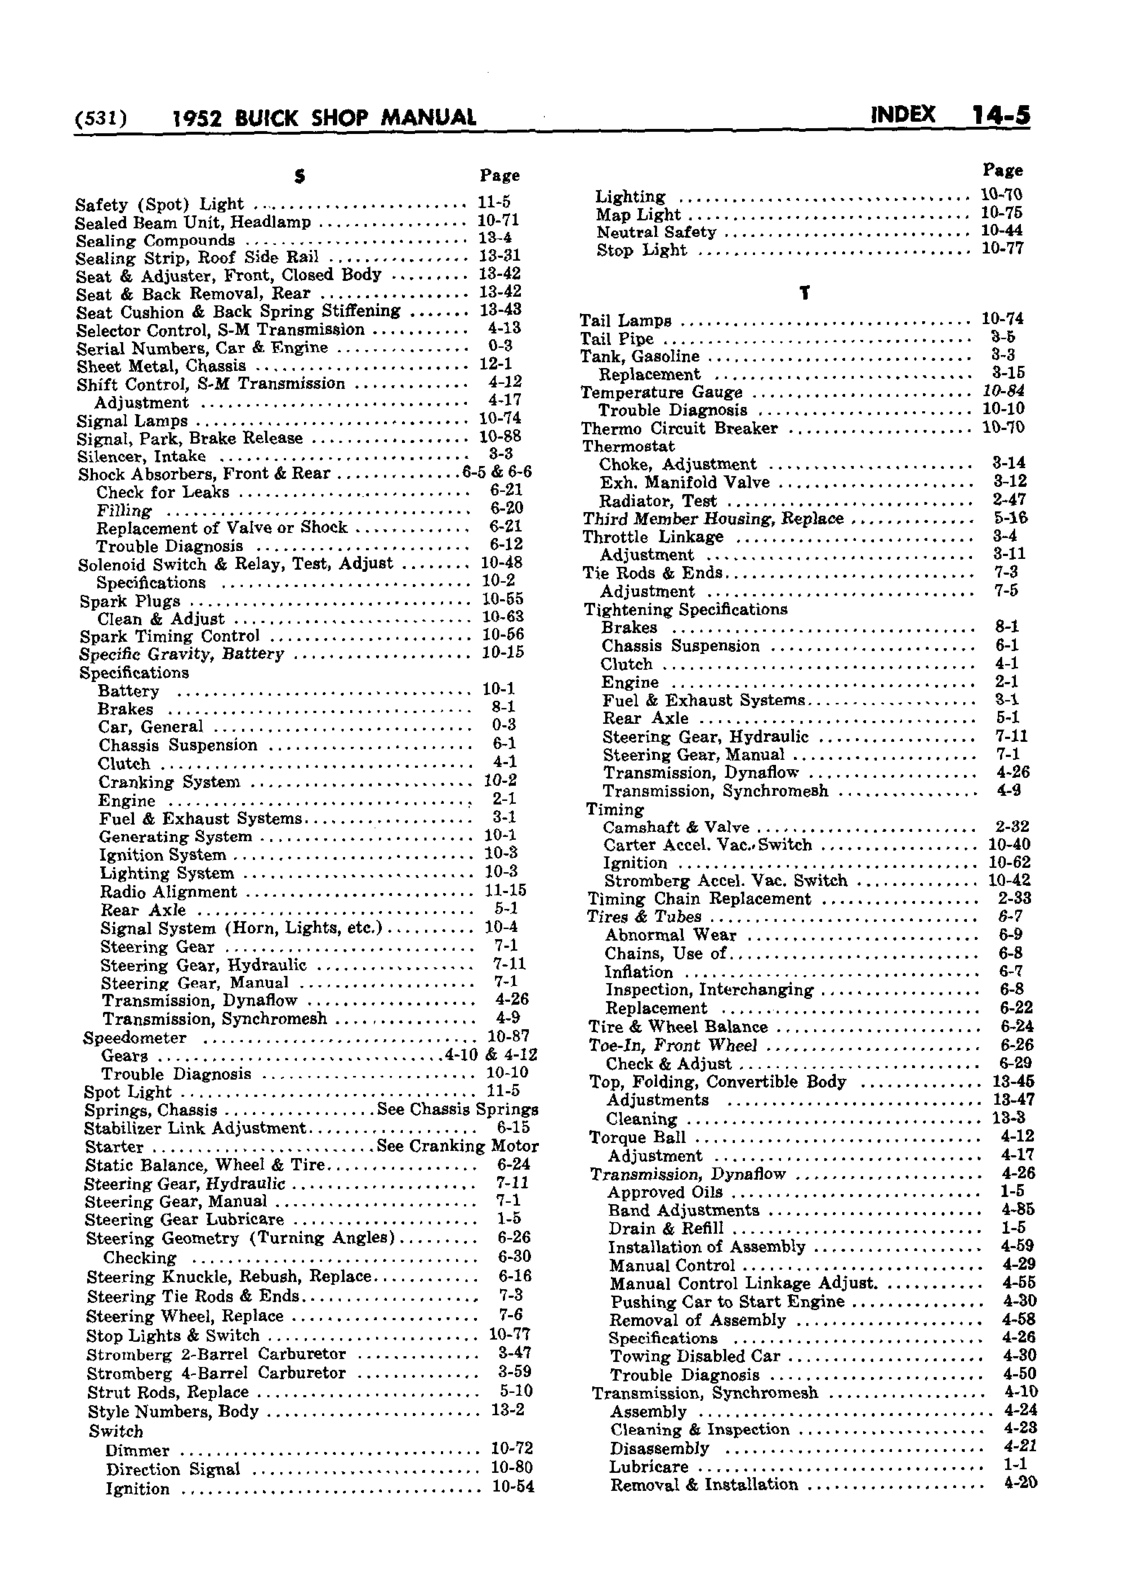 n_15 1952 Buick Shop Manual - Index-005-005.jpg